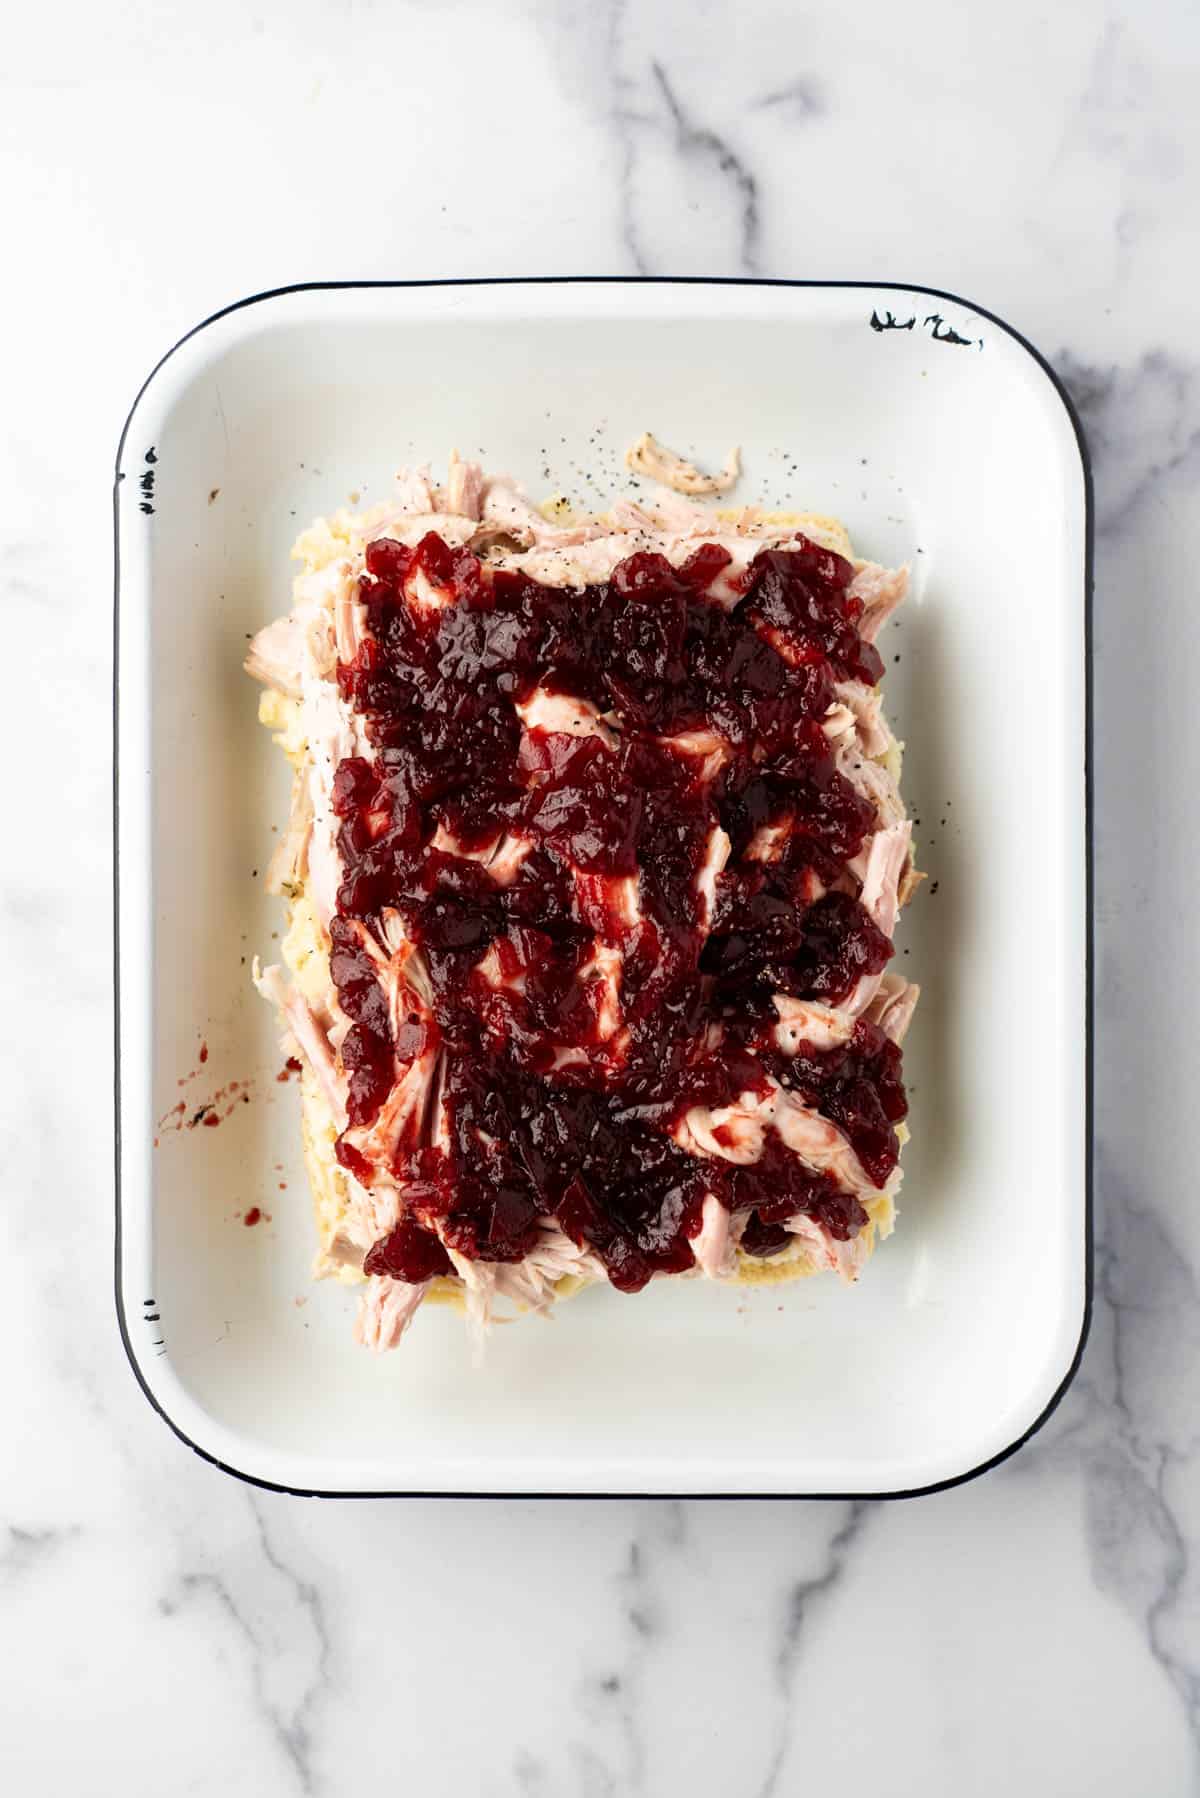 Jellied cranberry spread on top of shredded turkey sliders.